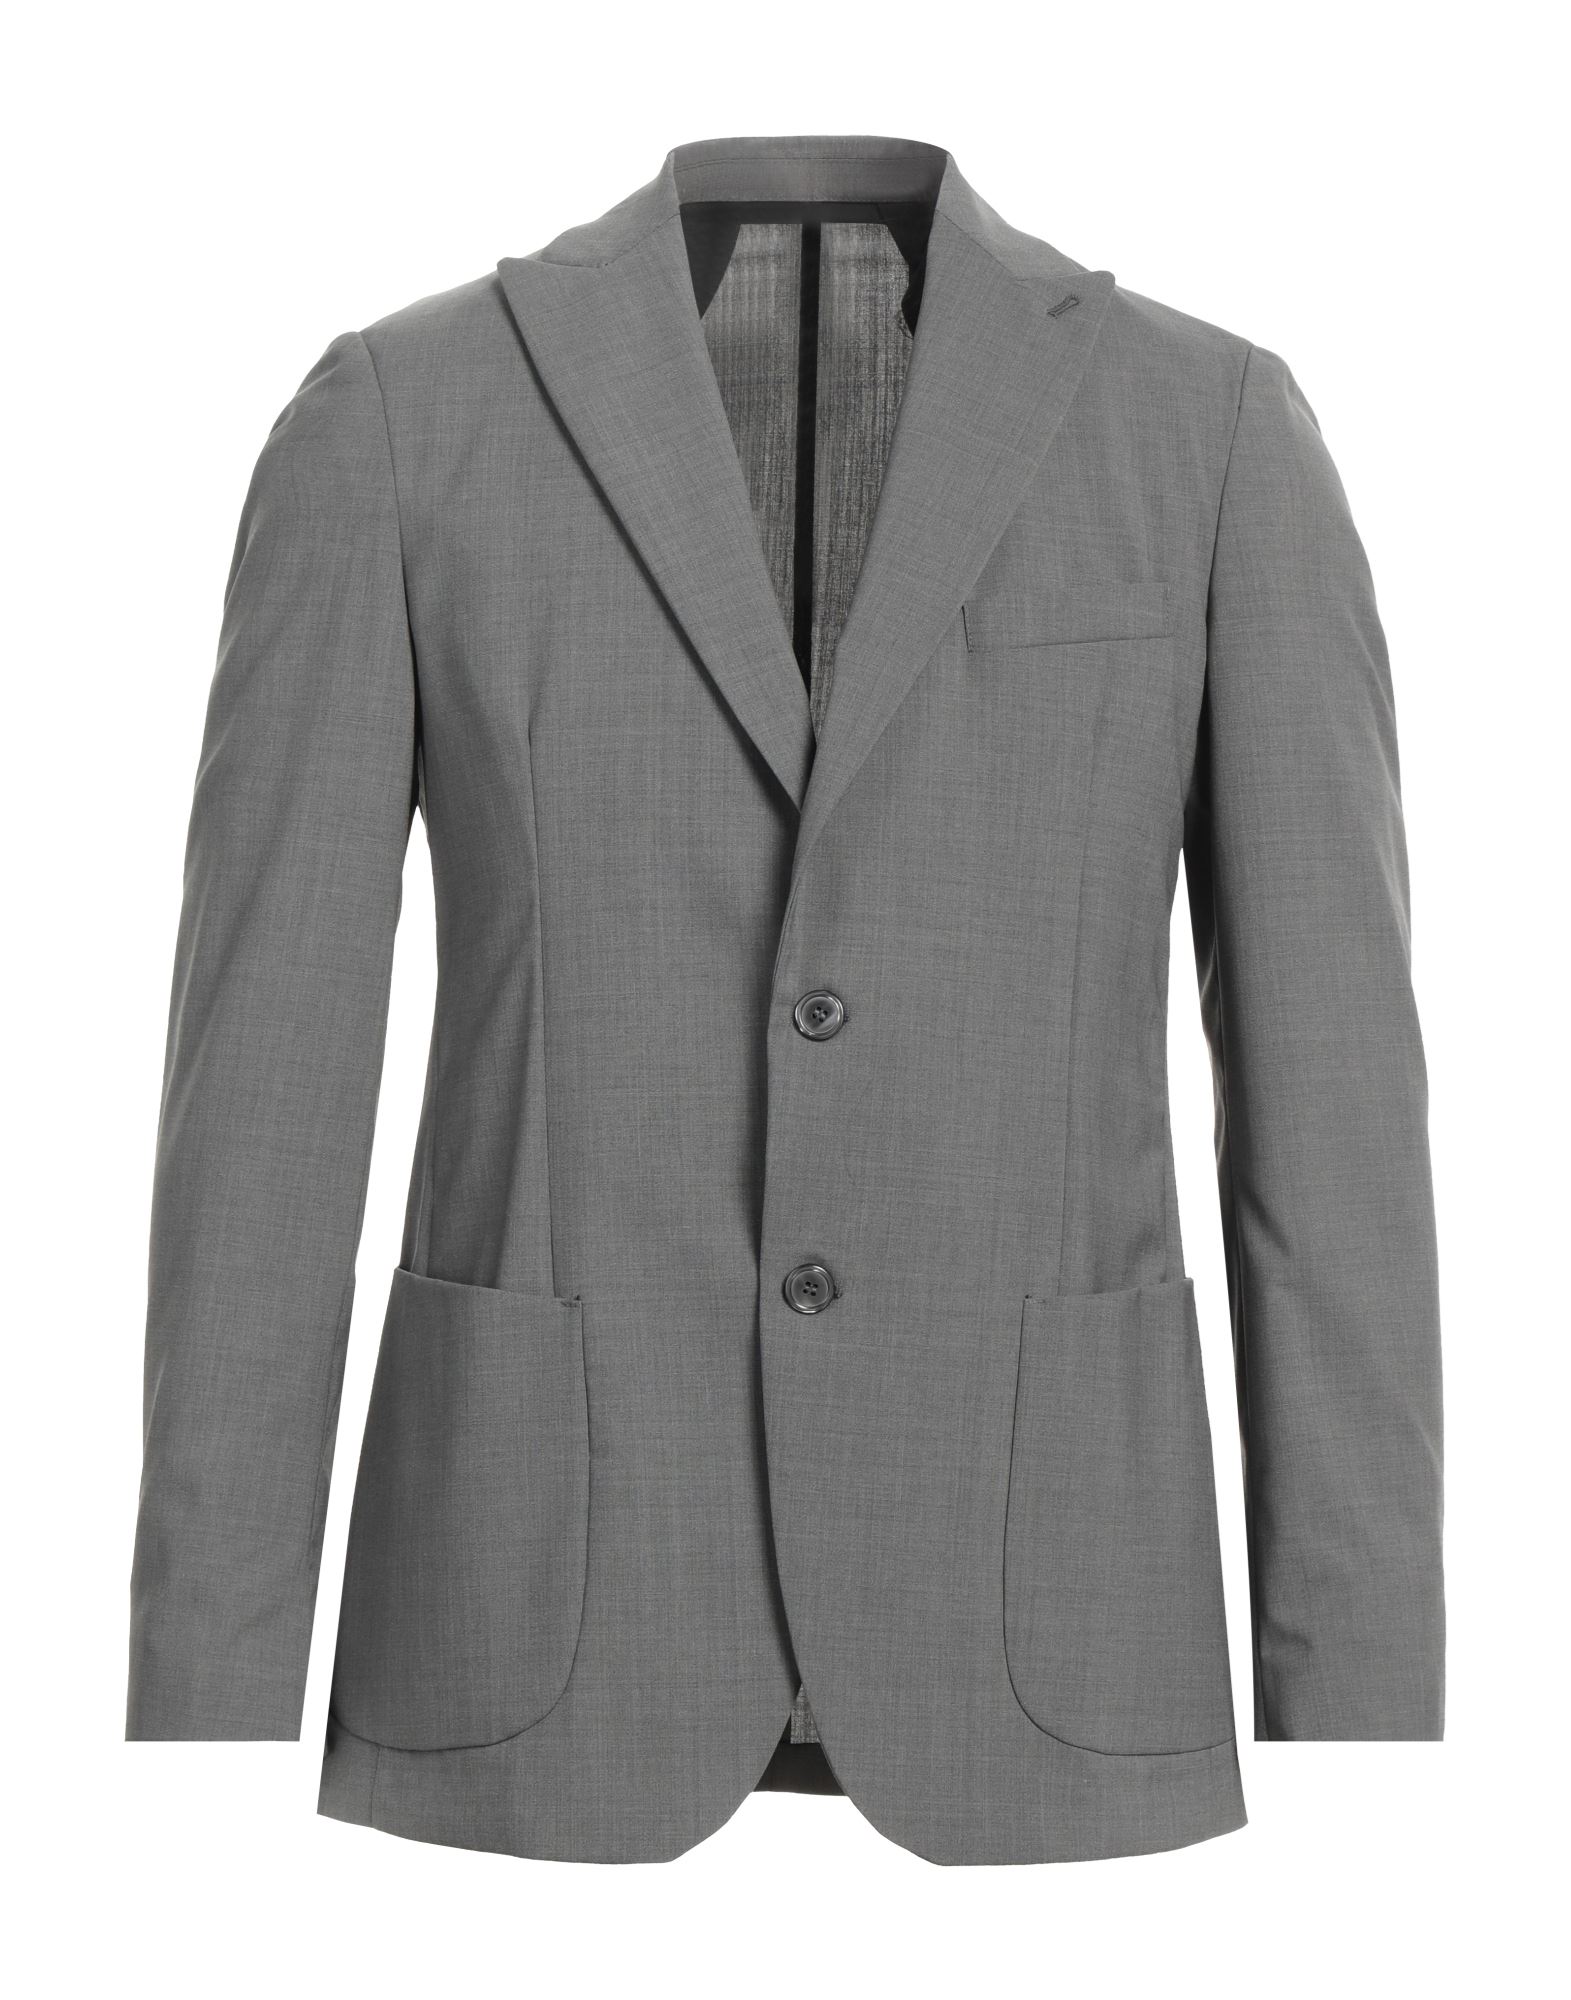 Gazzarrini Suit Jackets In Grey